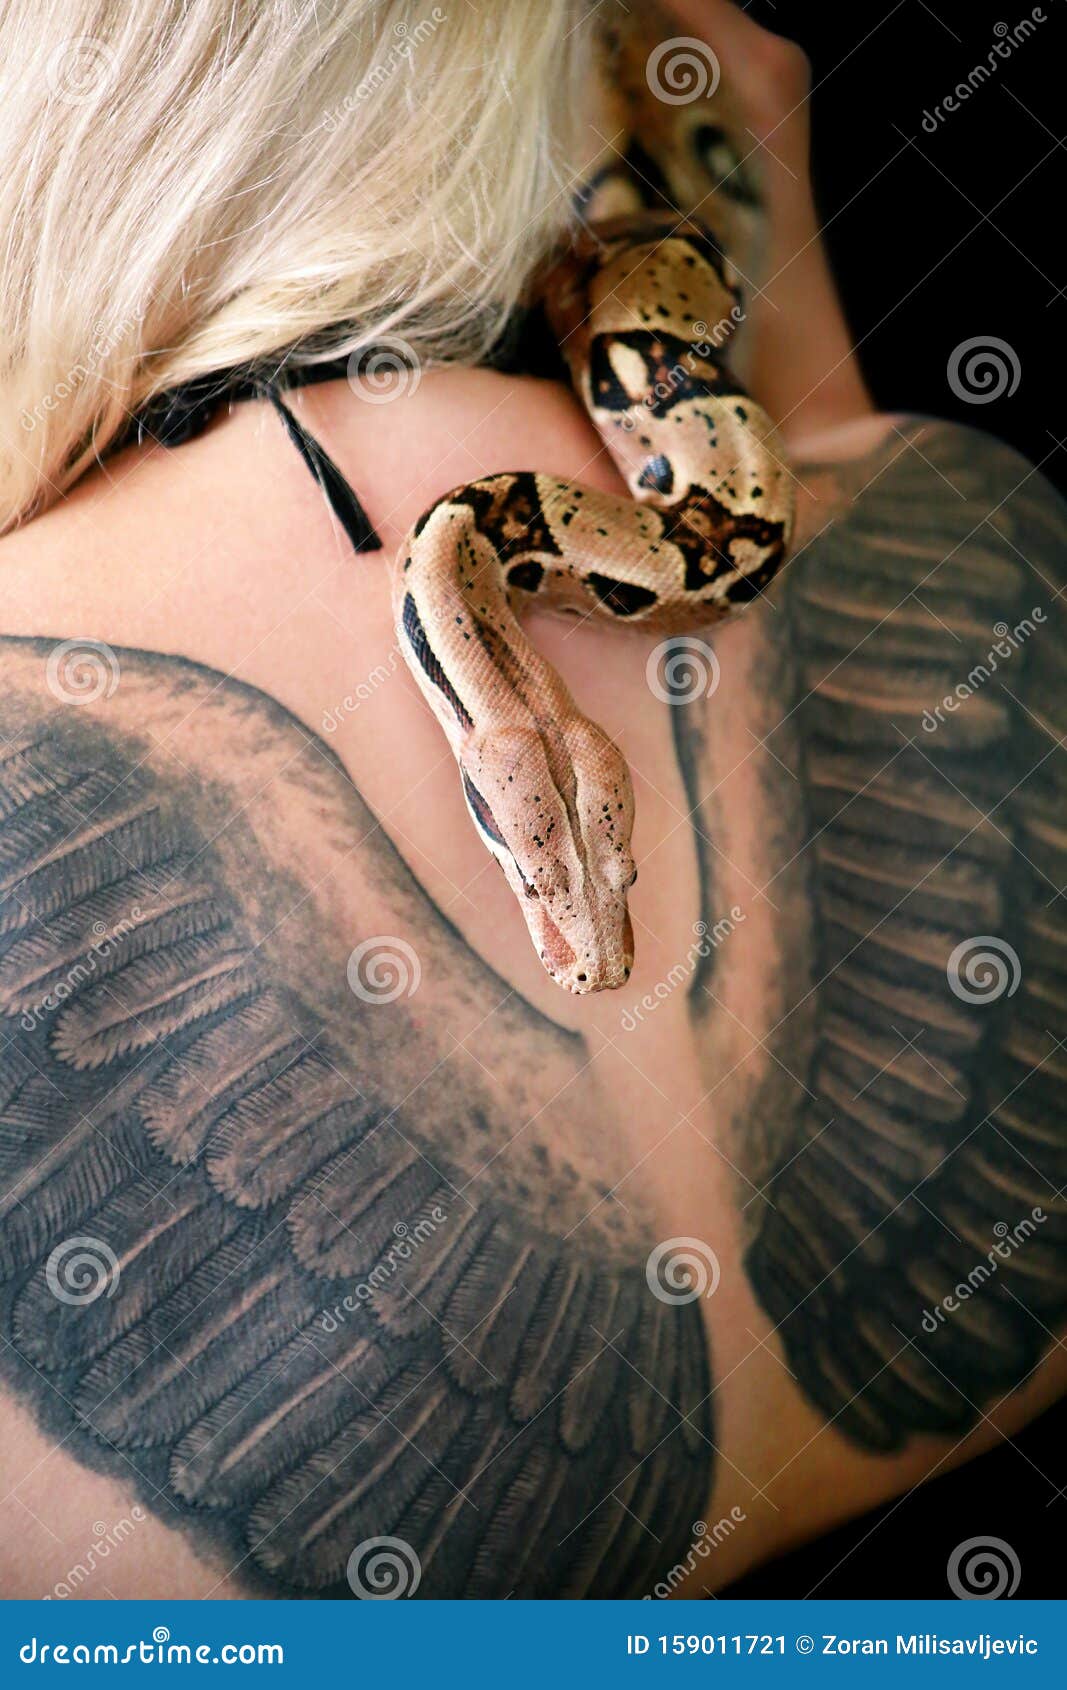 boa constrictor tattoo